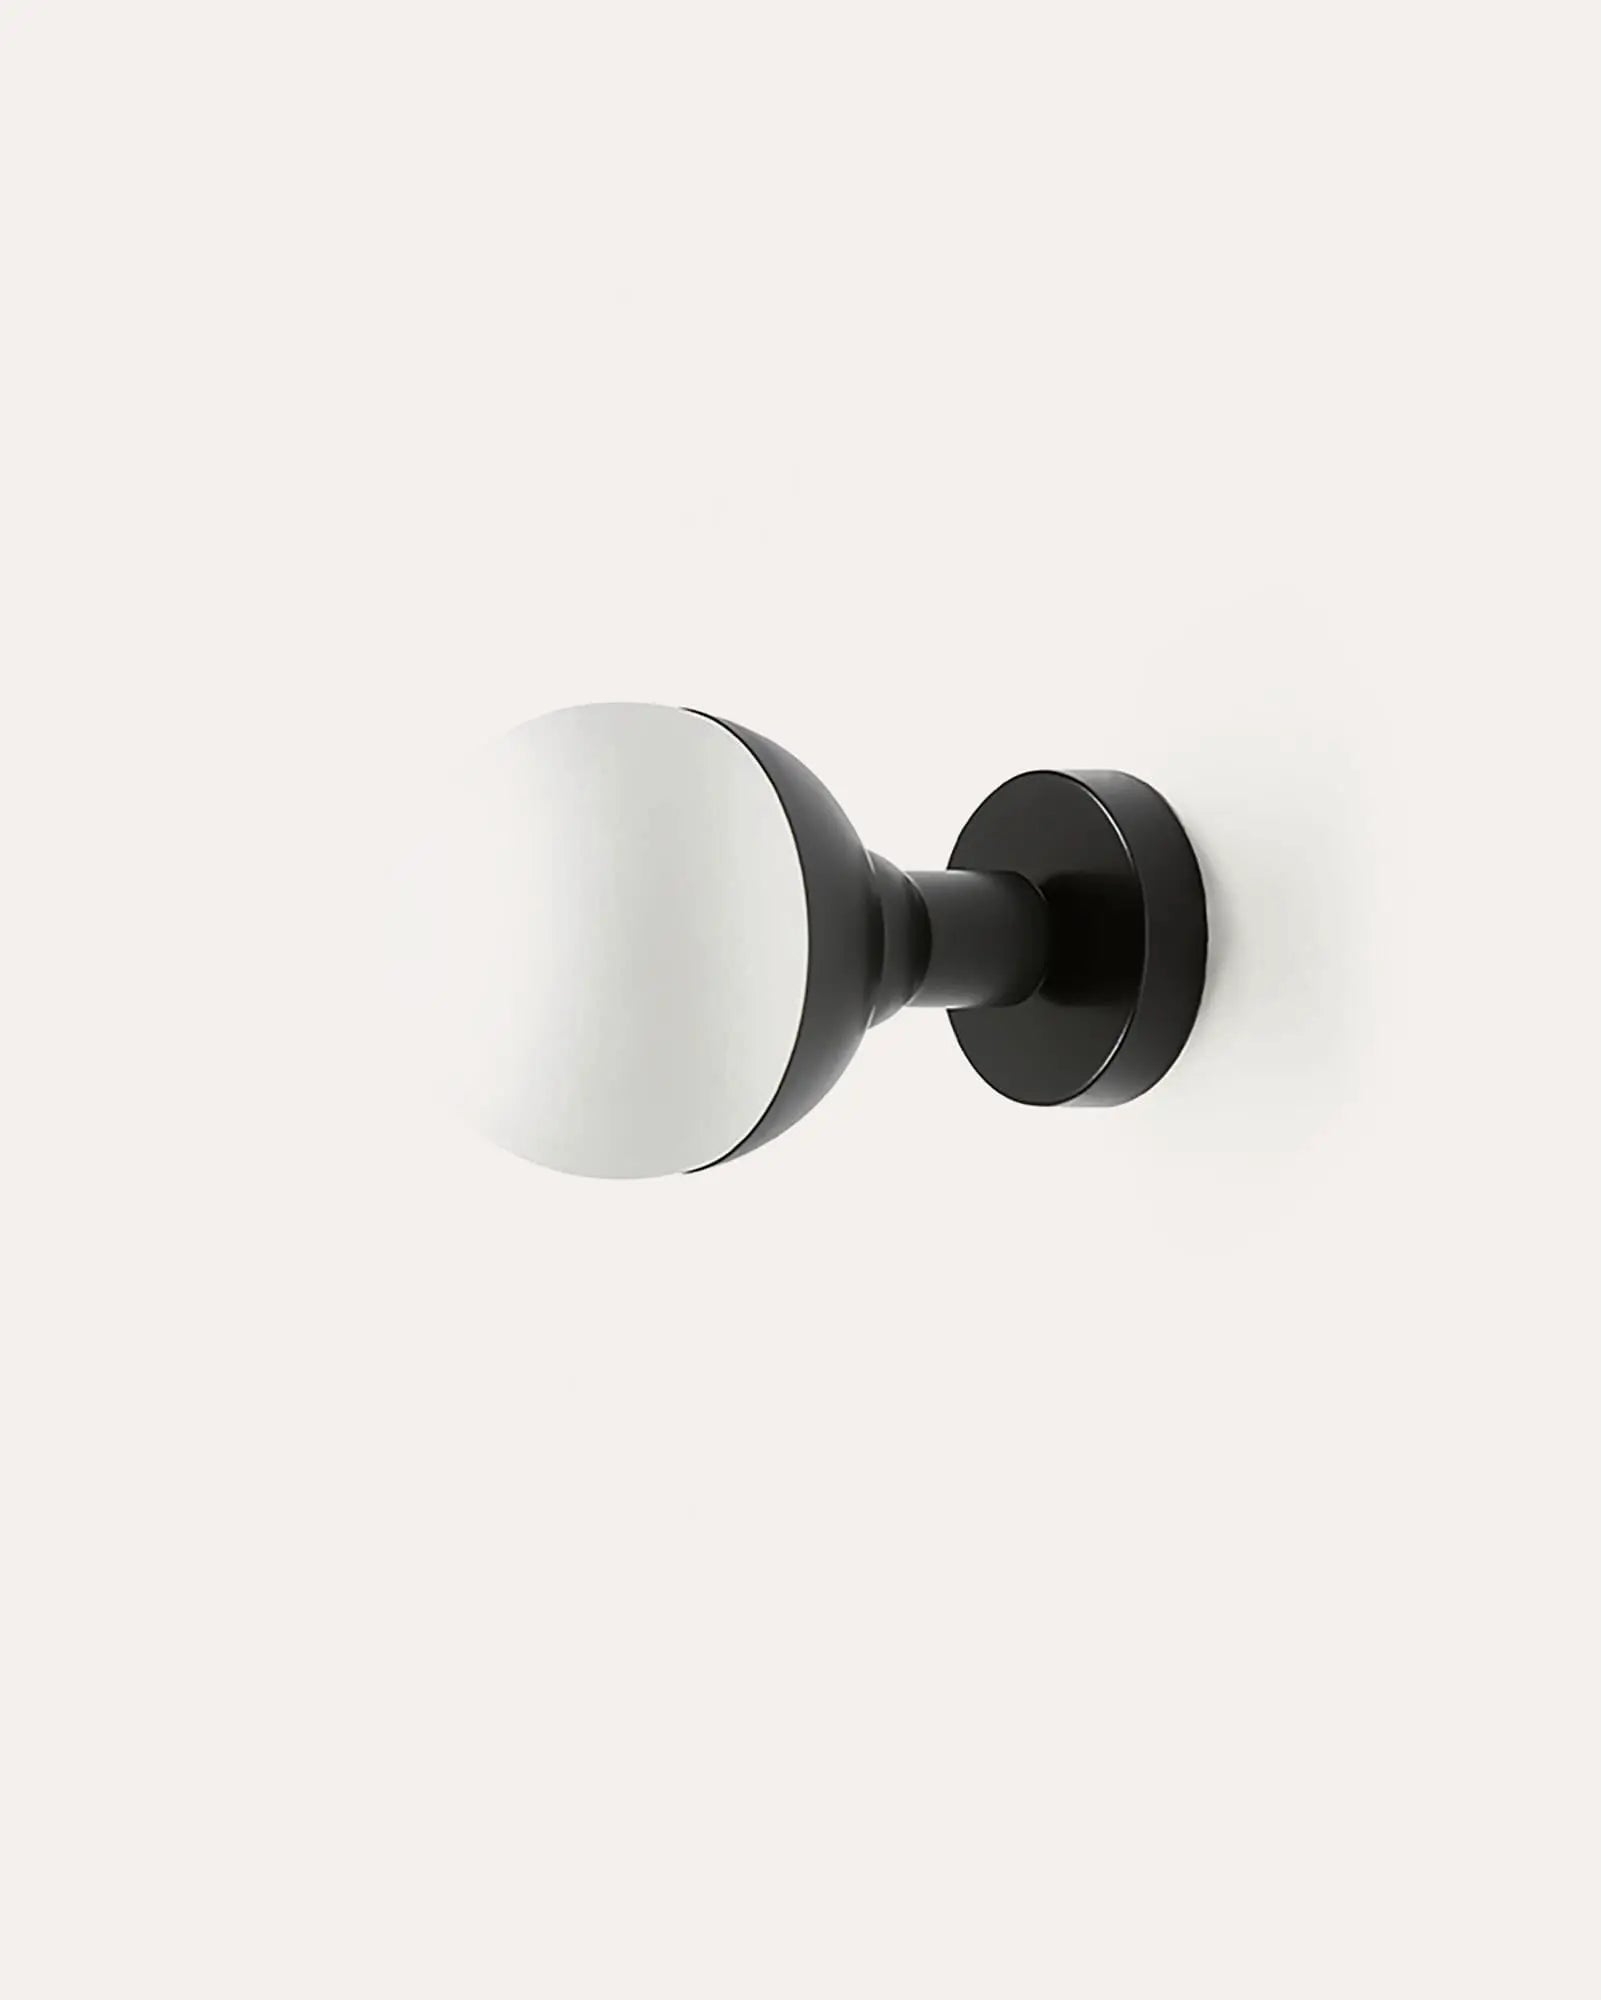 Helmet minimalistic wall light with orb opal glass shade in black